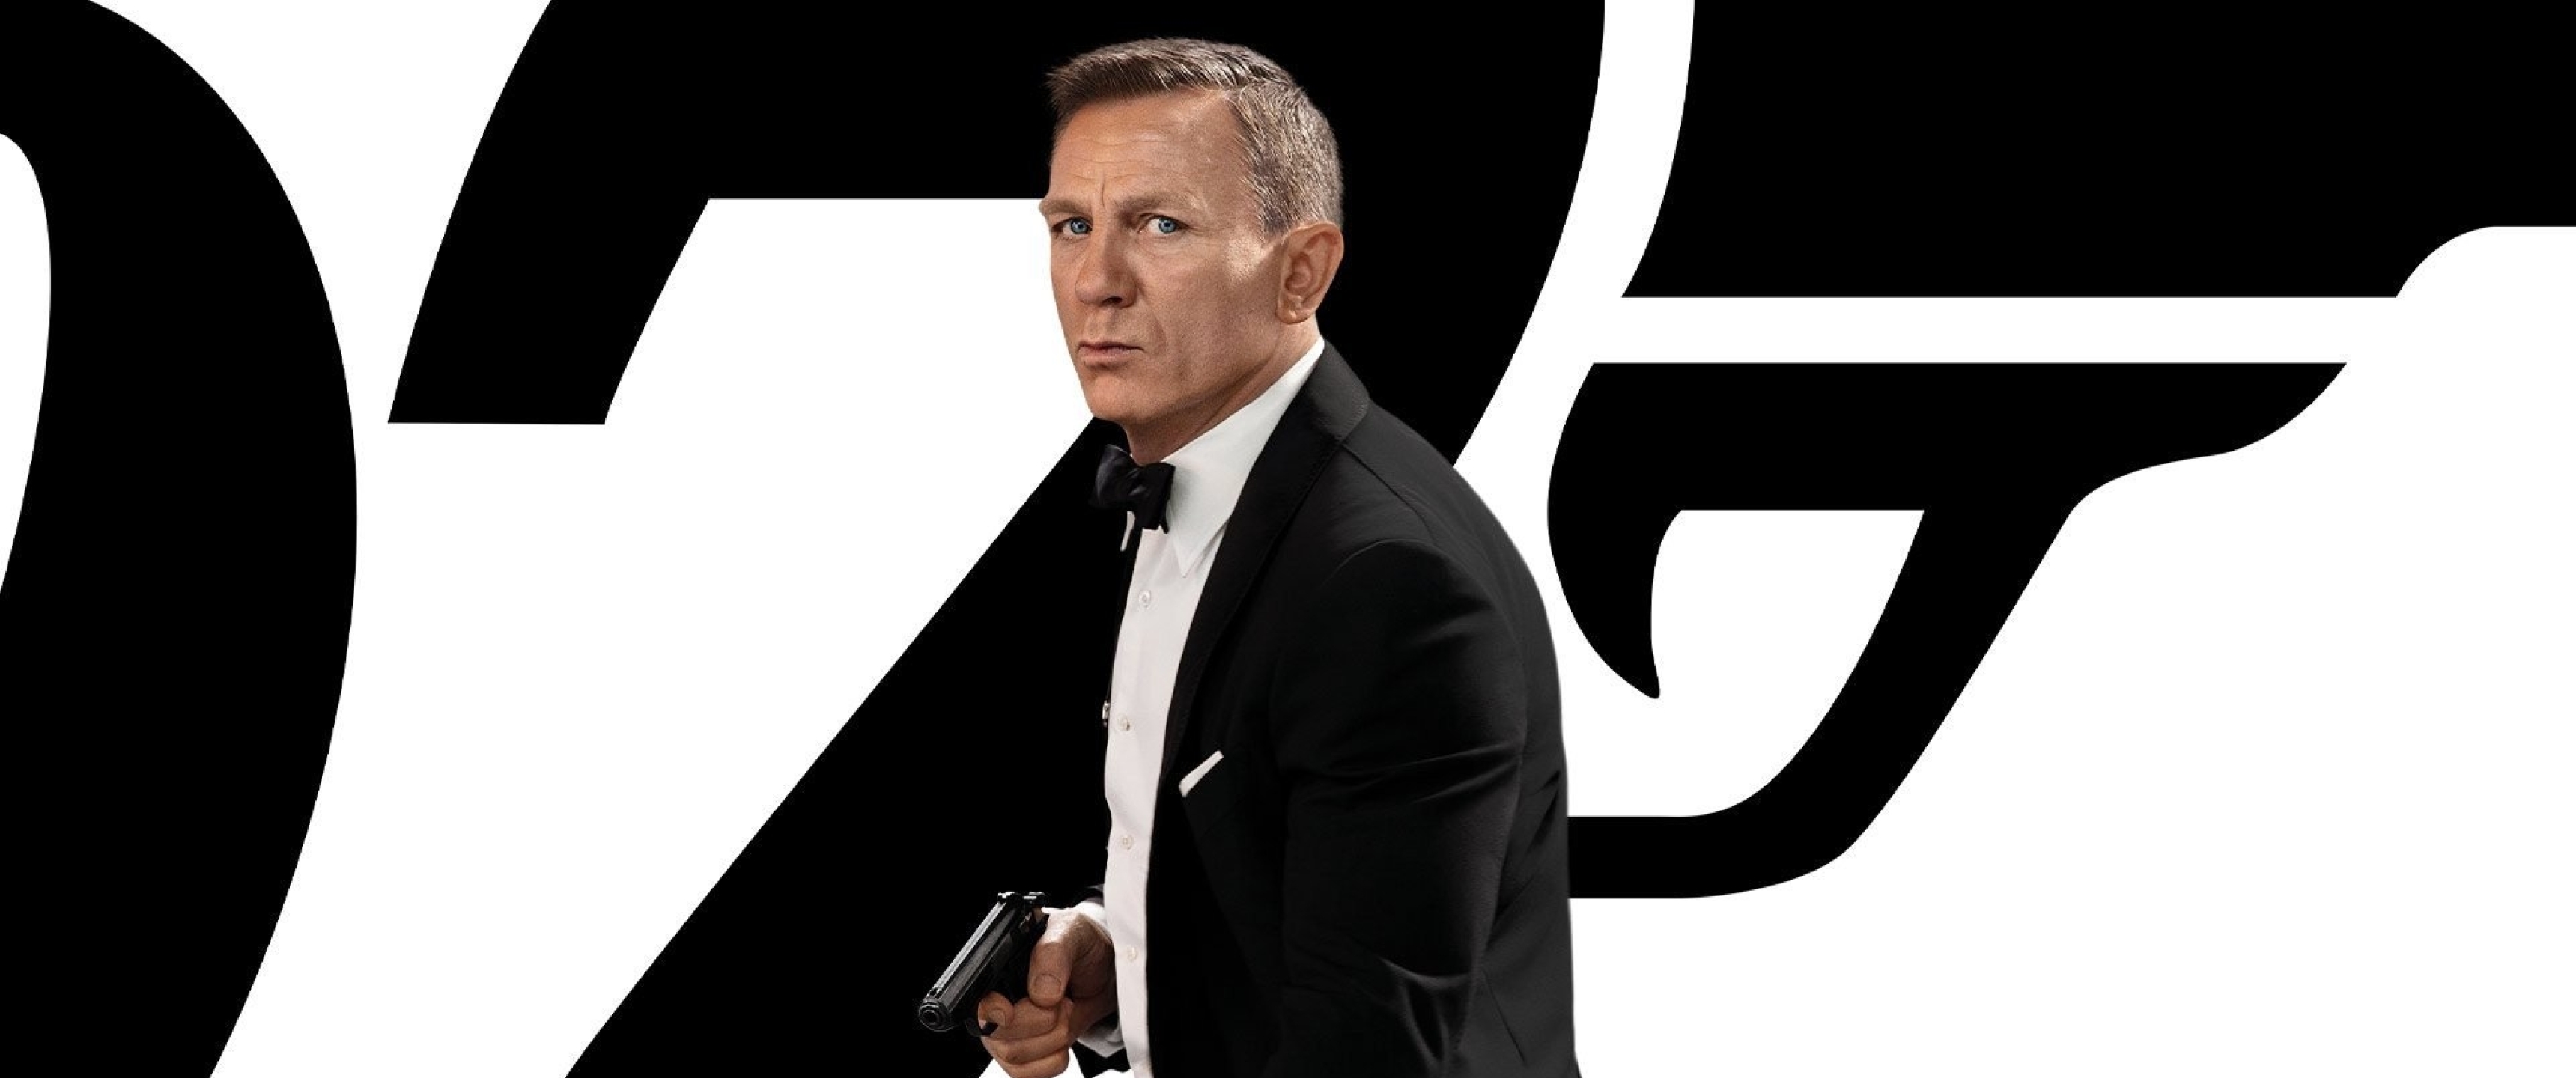 3440x1440 No Time To Die Daniel Craig As James Bond 3440x1440